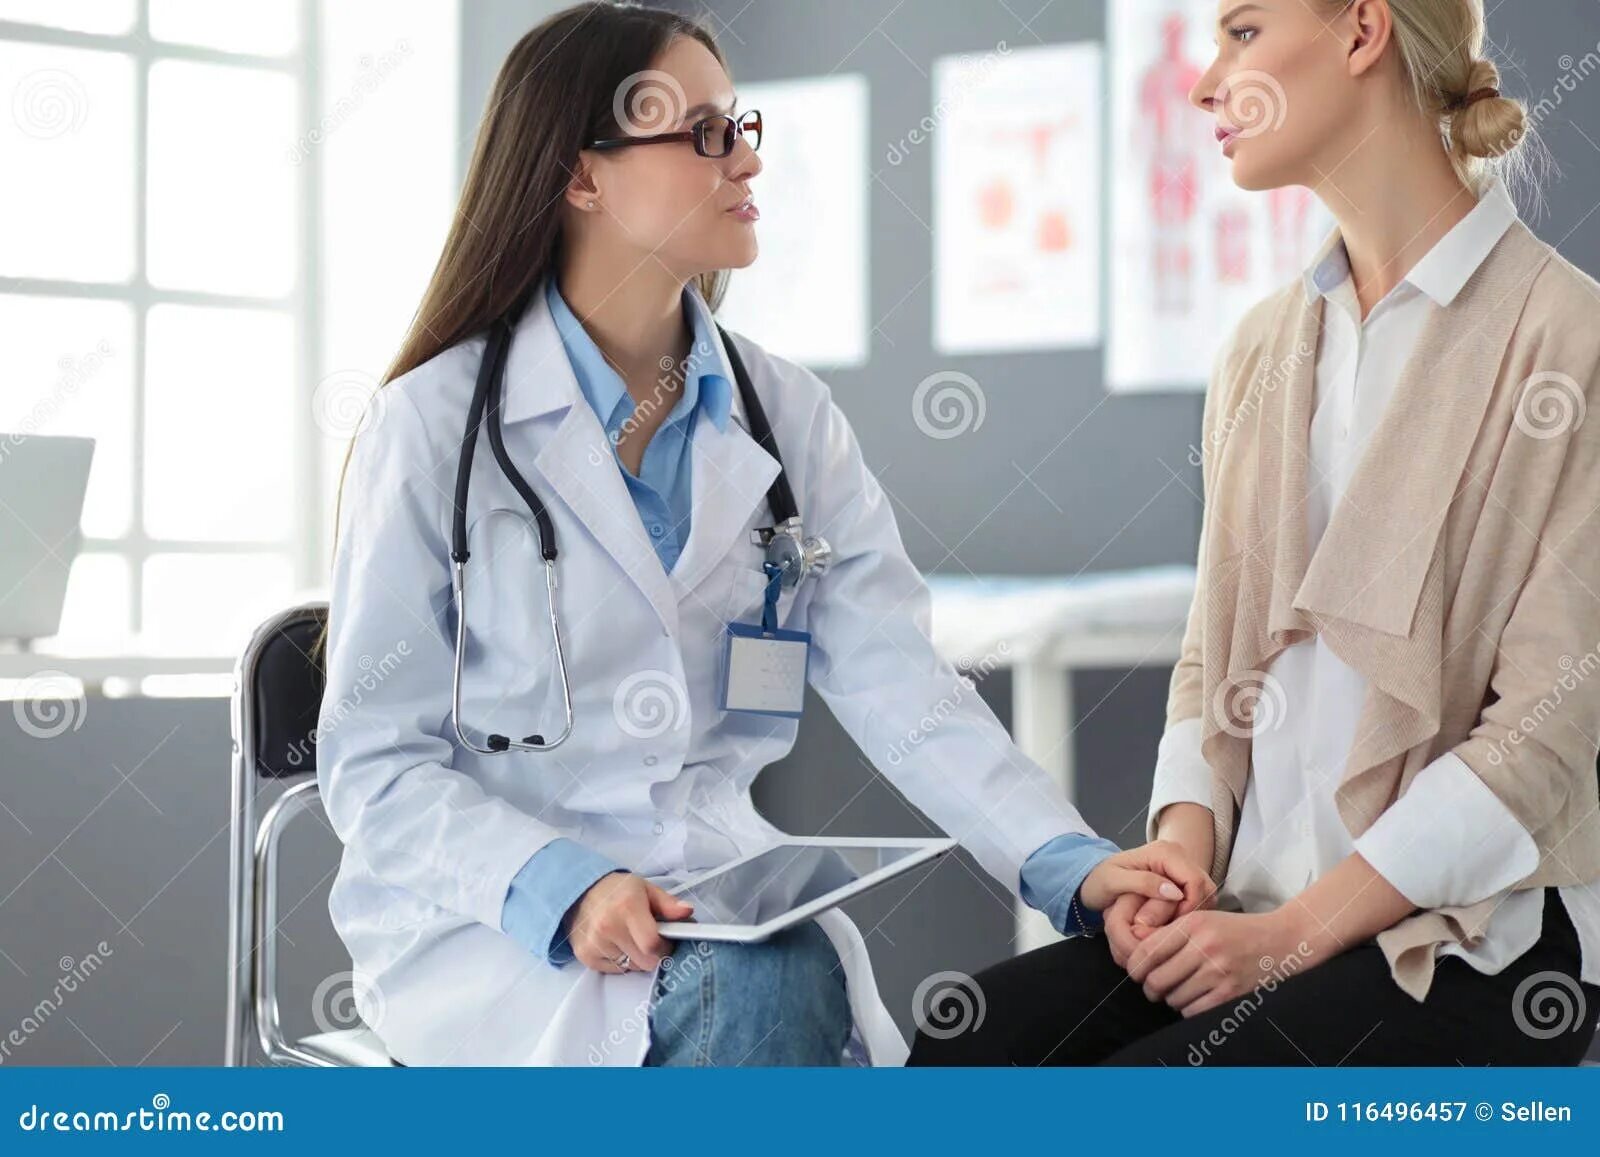 Доктор с пациентом. Врач и пациент Эстетика. Врачи обсуждают пациентов. Эстетика врачей и медсестер.